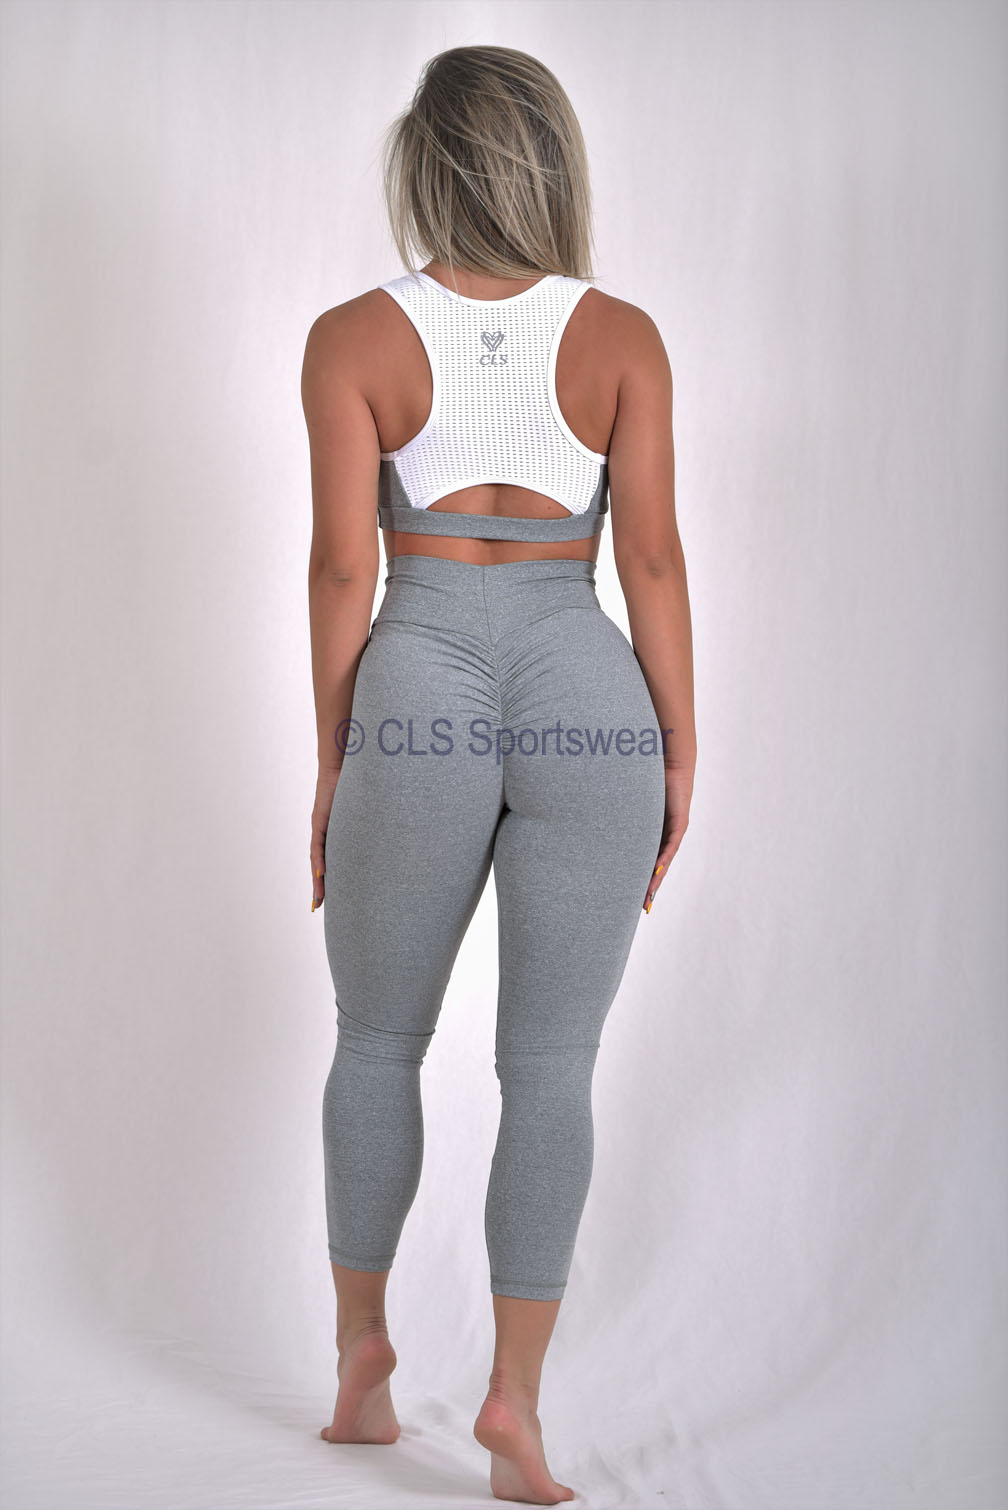 CLS Sportswear - The NC Signature Scrunch Leggings Fuse Light on  @biancamichelleex7